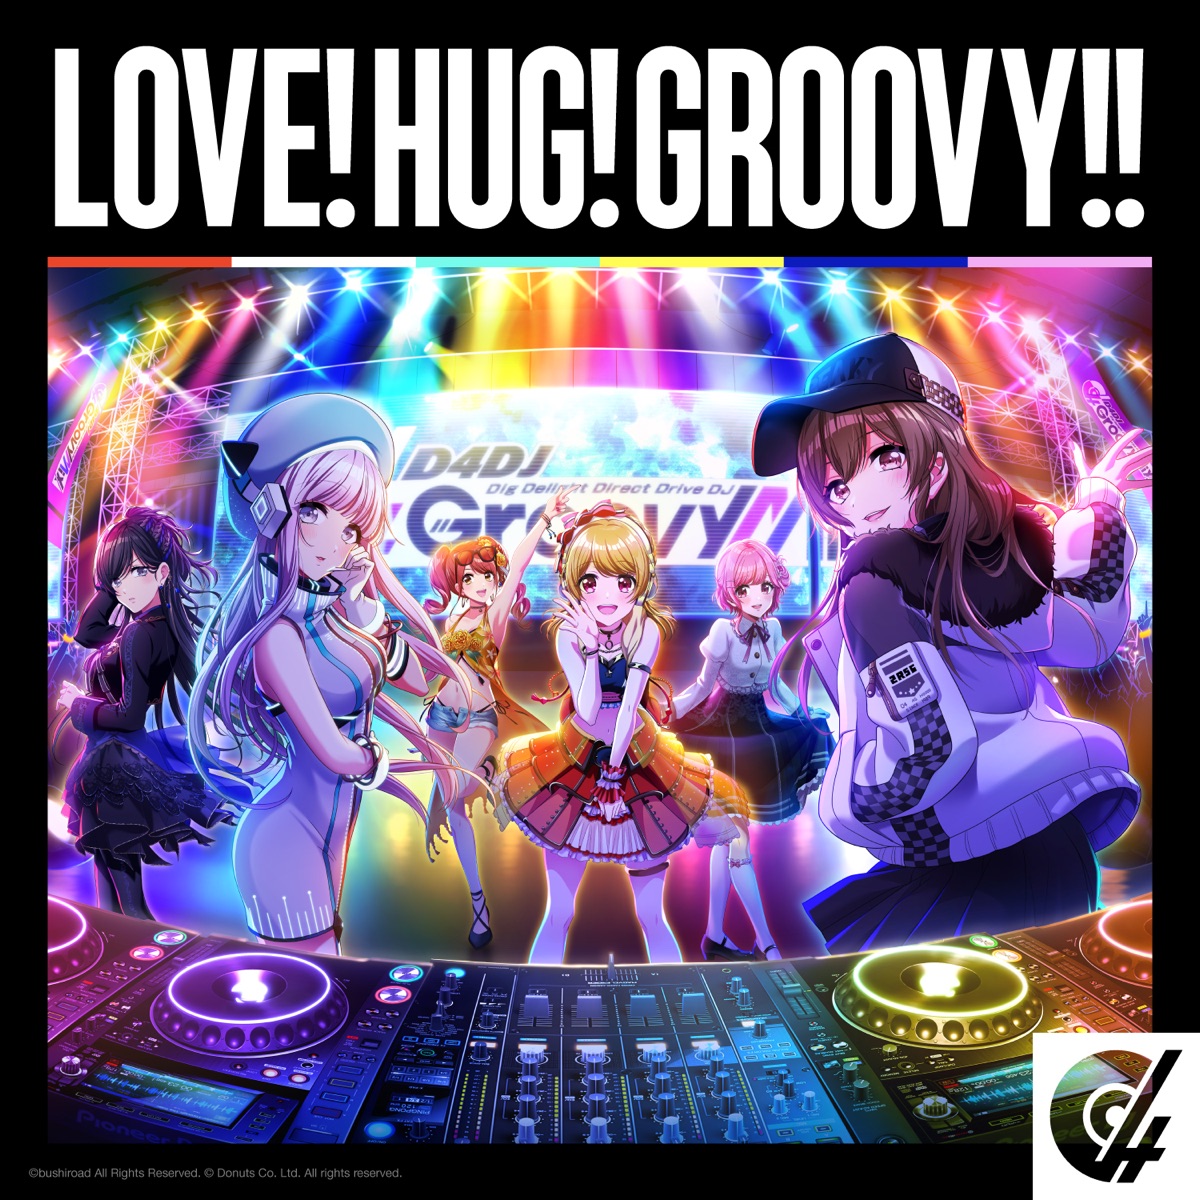 Cover art for『D4DJ ALL STARS - LOVE!HUG!GROOVY!!』from the release『LOVE!HUG!GROOVY!!